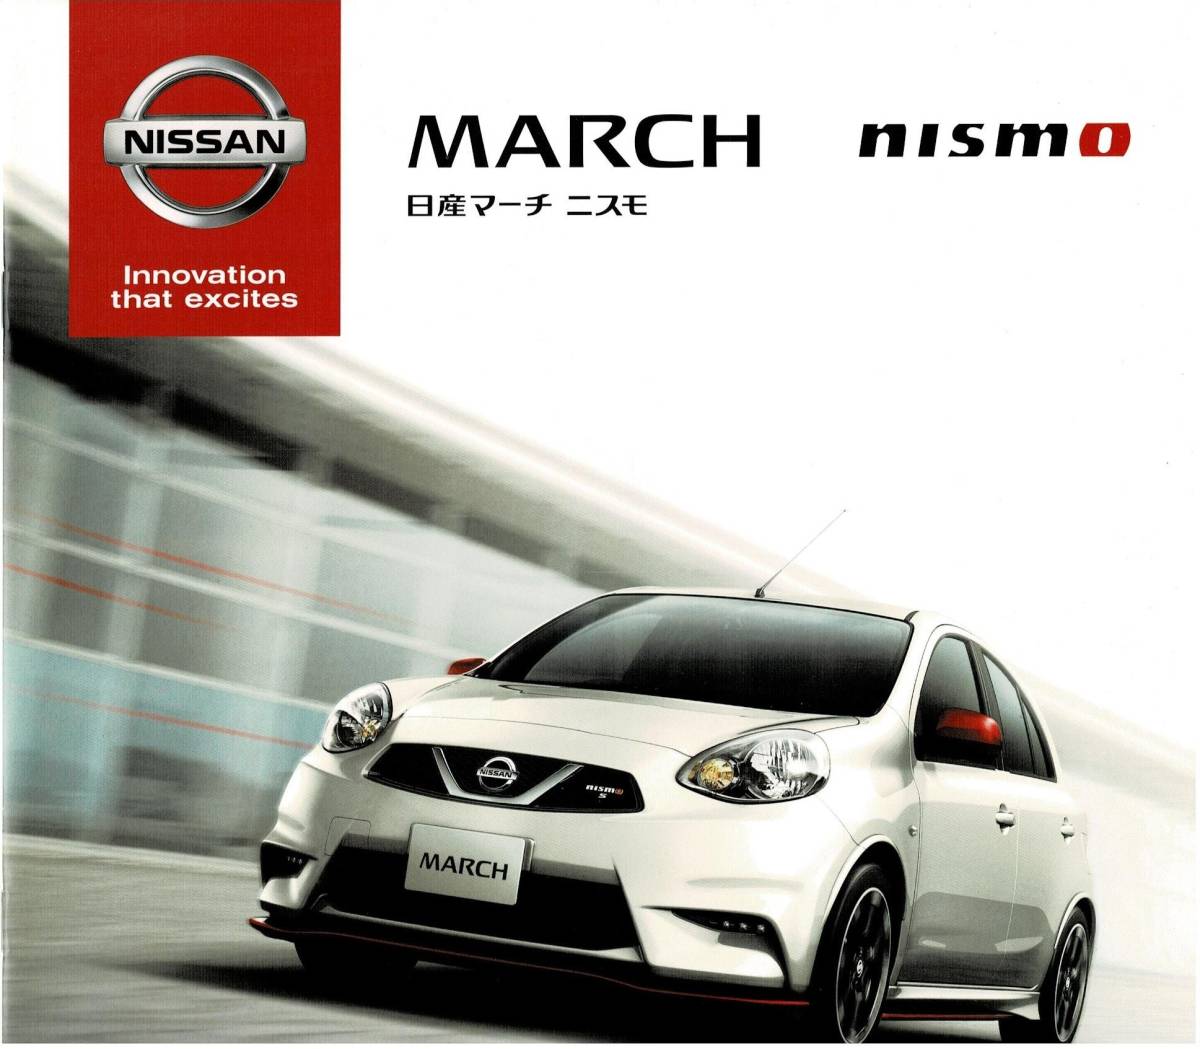  Nissan March каталог +OP 2013 год 8 месяц 